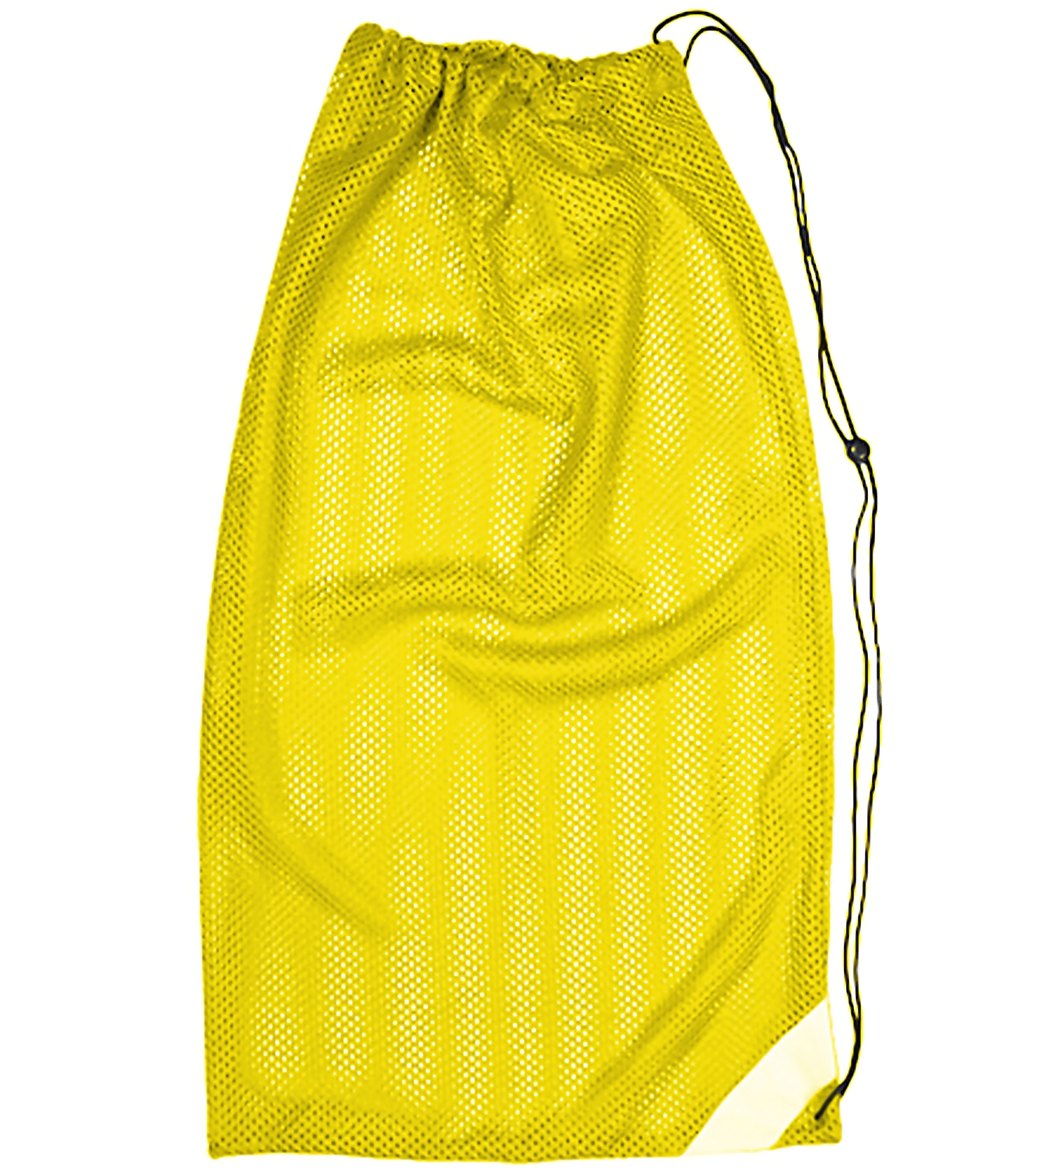 Bettertimes Mesh Bag - Yellow - Swimoutlet.com